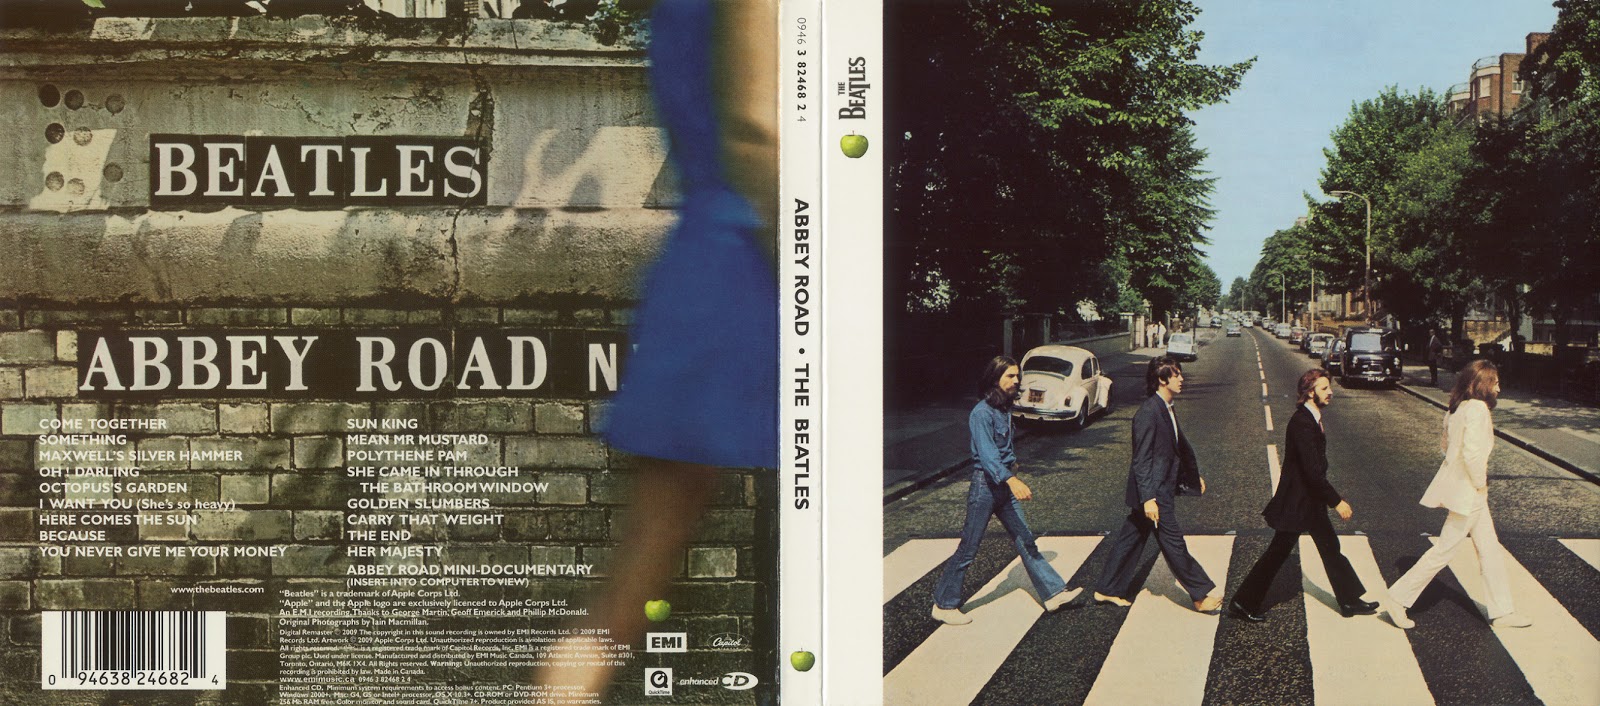 Cd roads. The Beatles Эбби роуд. Эбби роуд Лондон Битлз. Диск Abbey Road Beatles. Битлз Эбби роуд обложка.